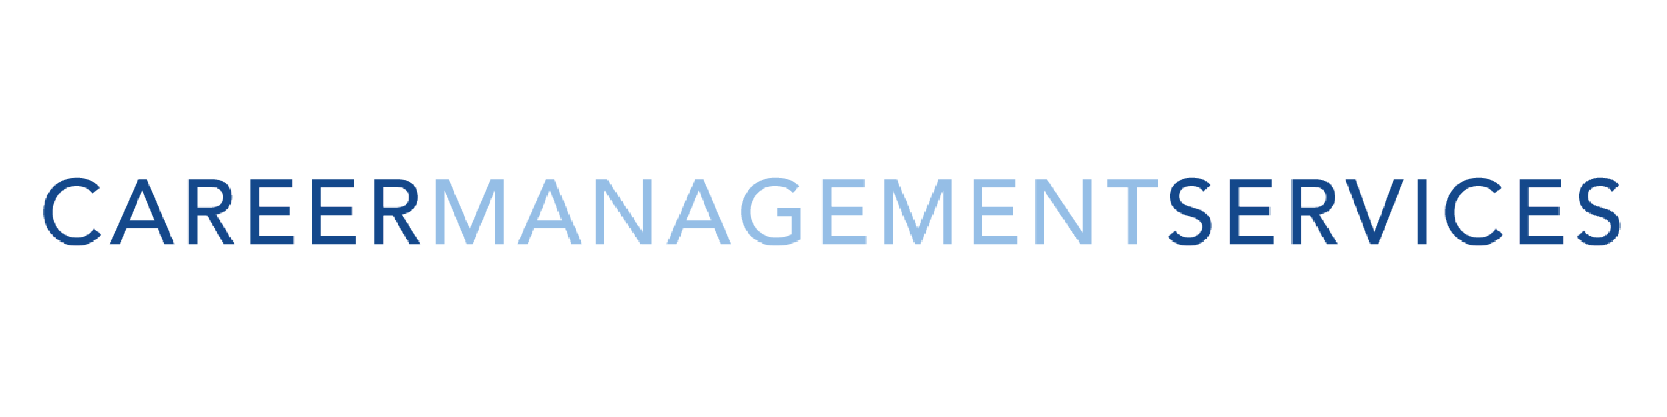 Career Management Services word banner